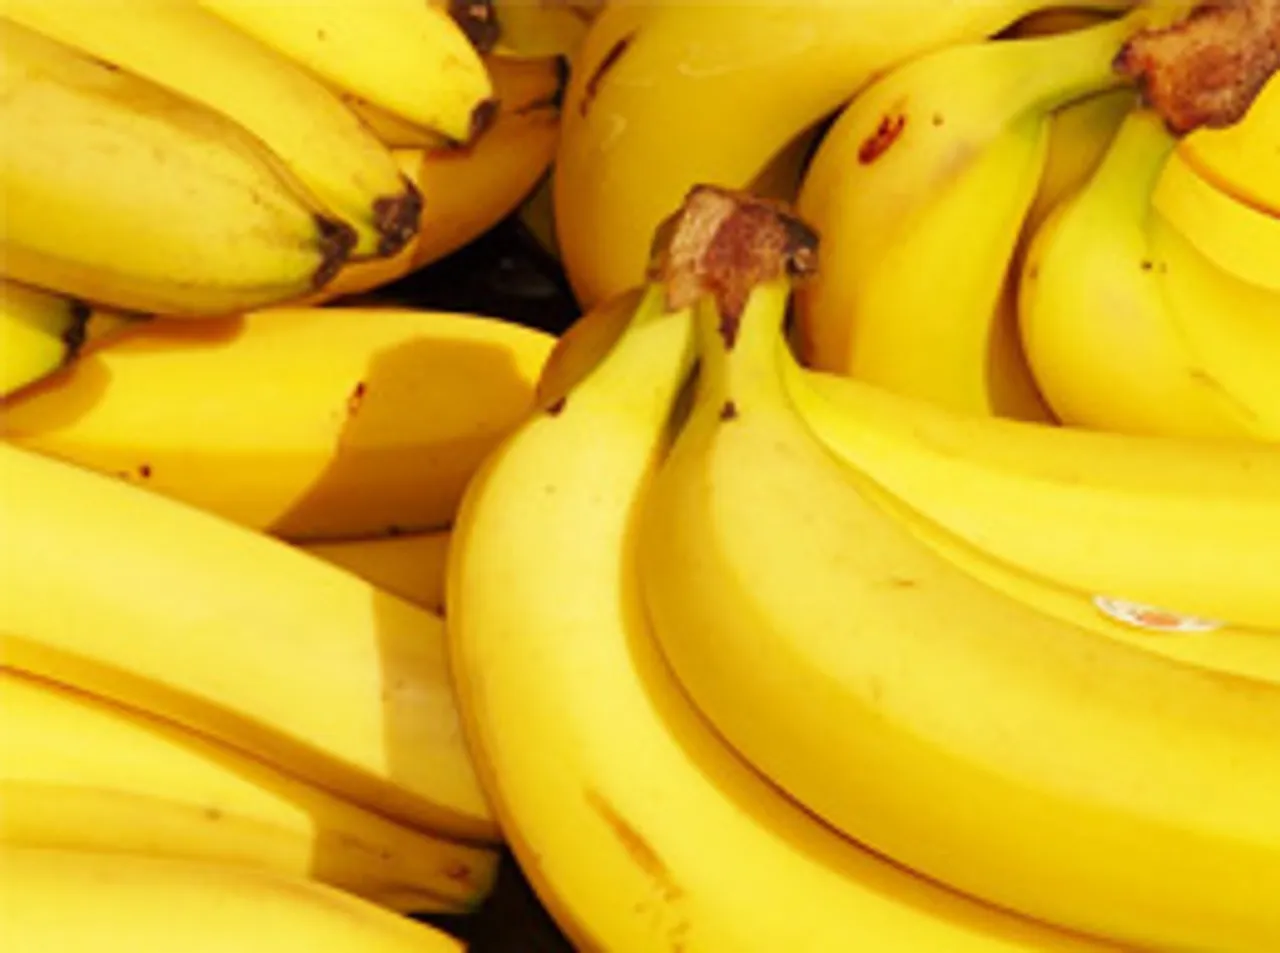 9 amazing reasons why bananas rule